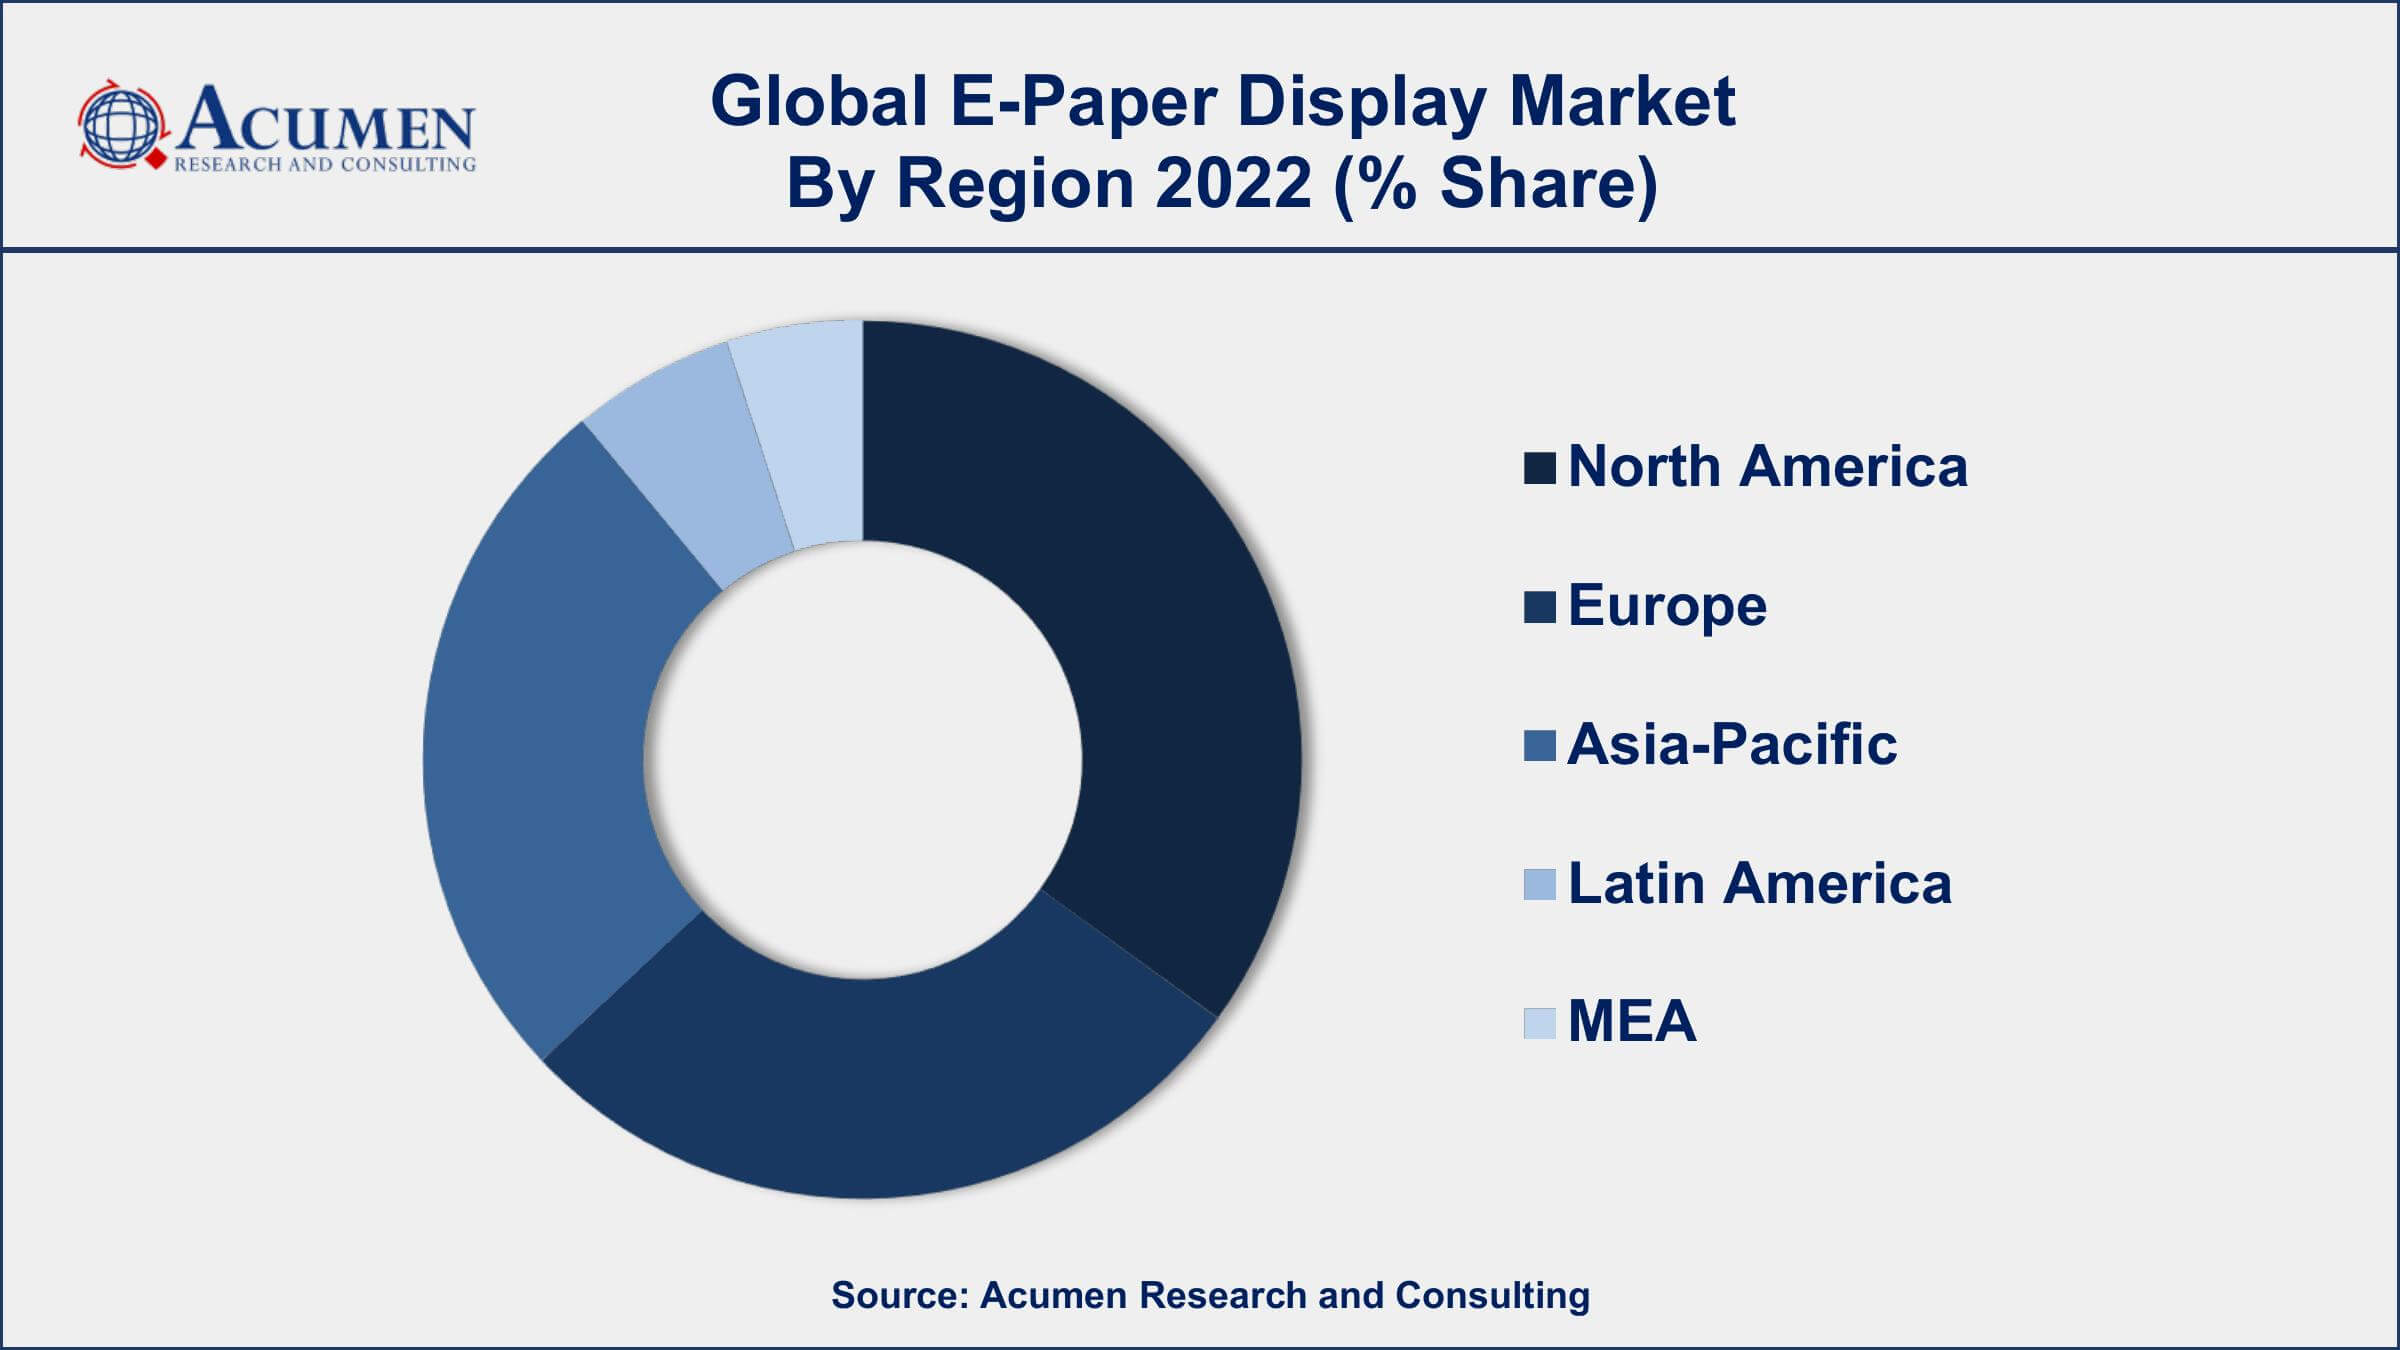 E-Paper Display Market Drivers